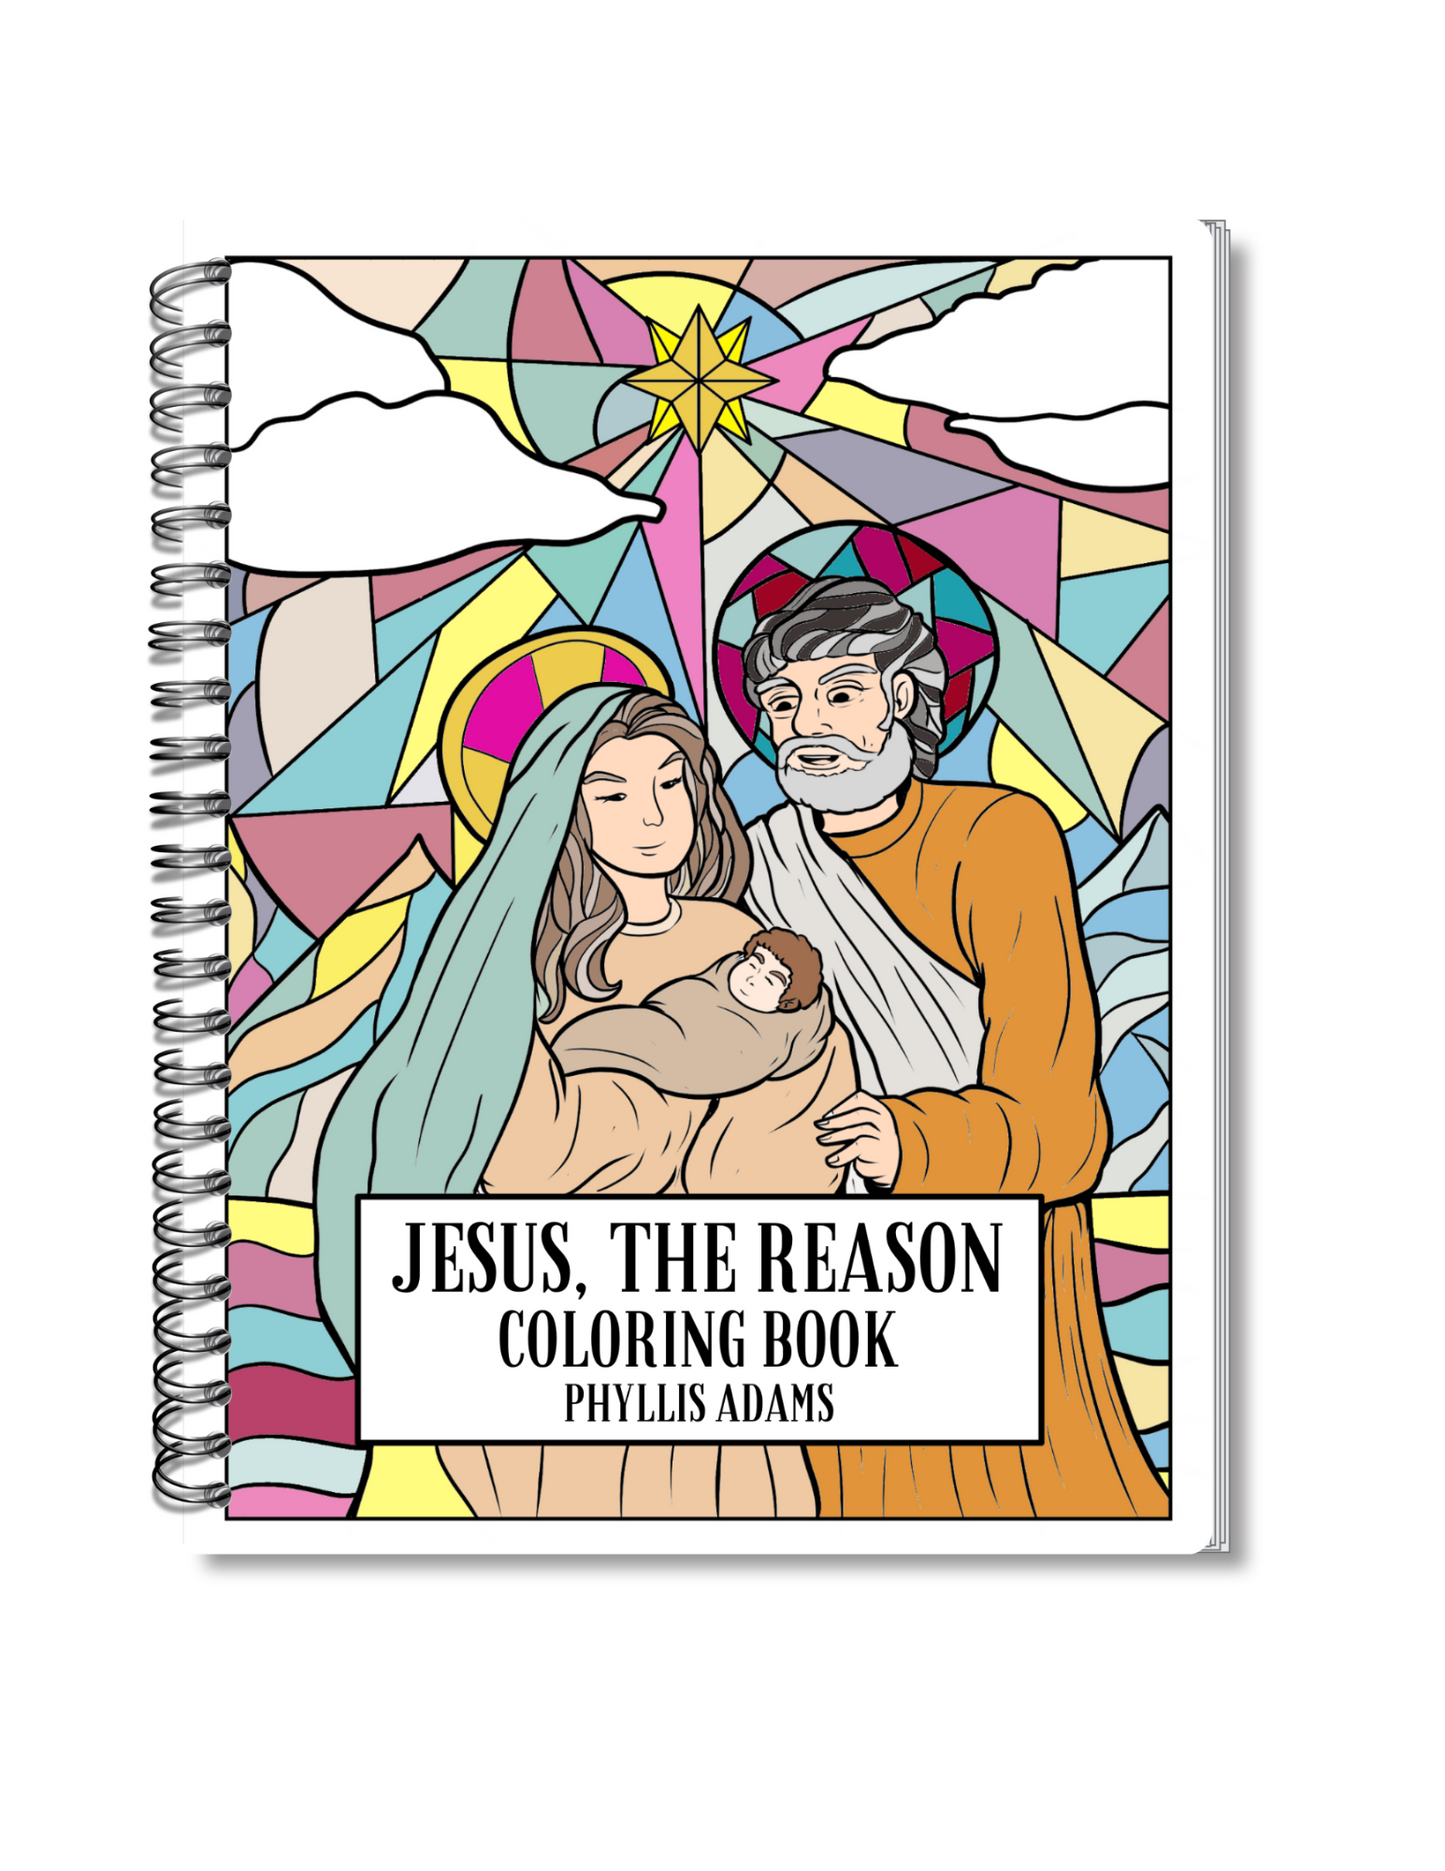 JESUS, THE REASON COLORING BOOK